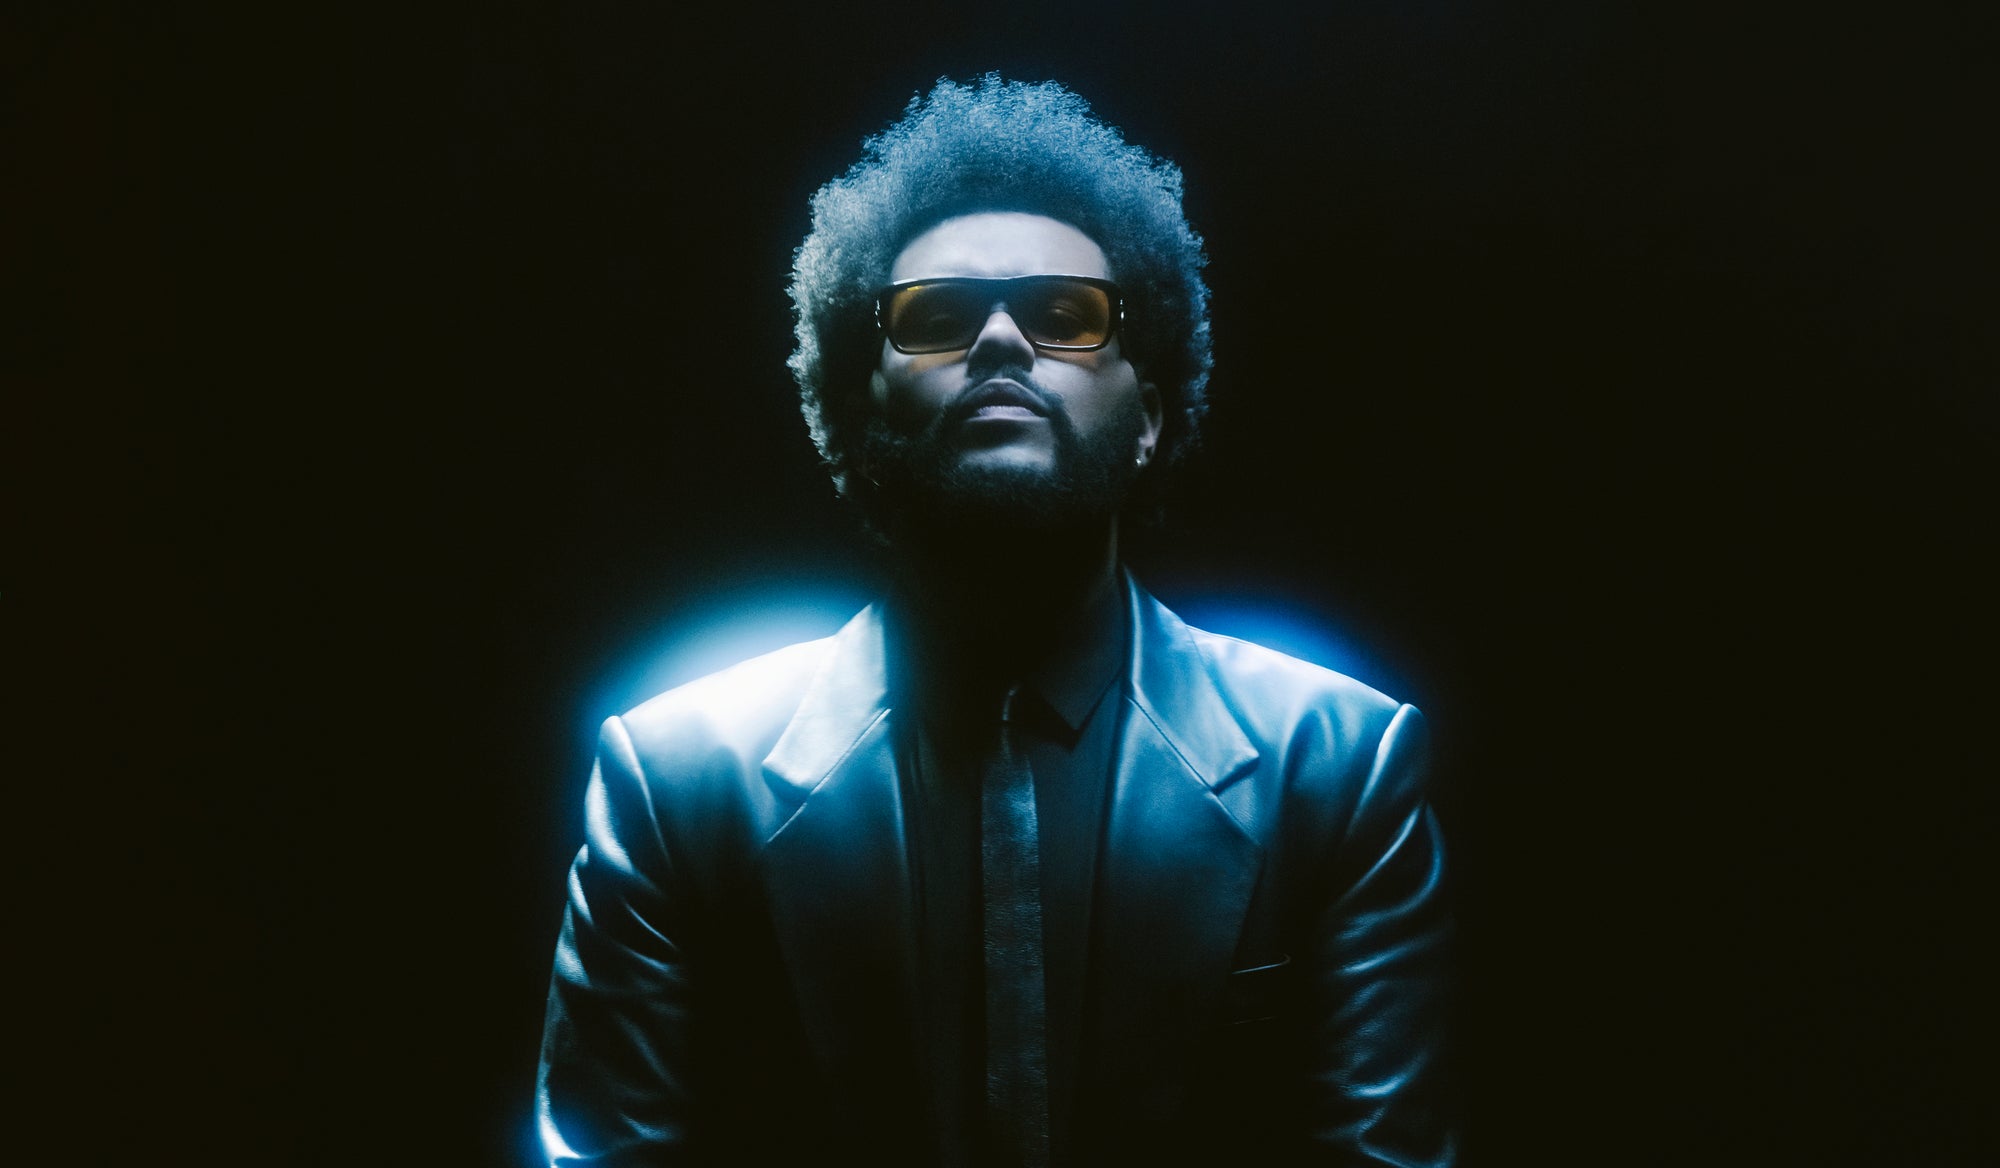 Vinili, CD e Merch ufficiale di The Weeknd